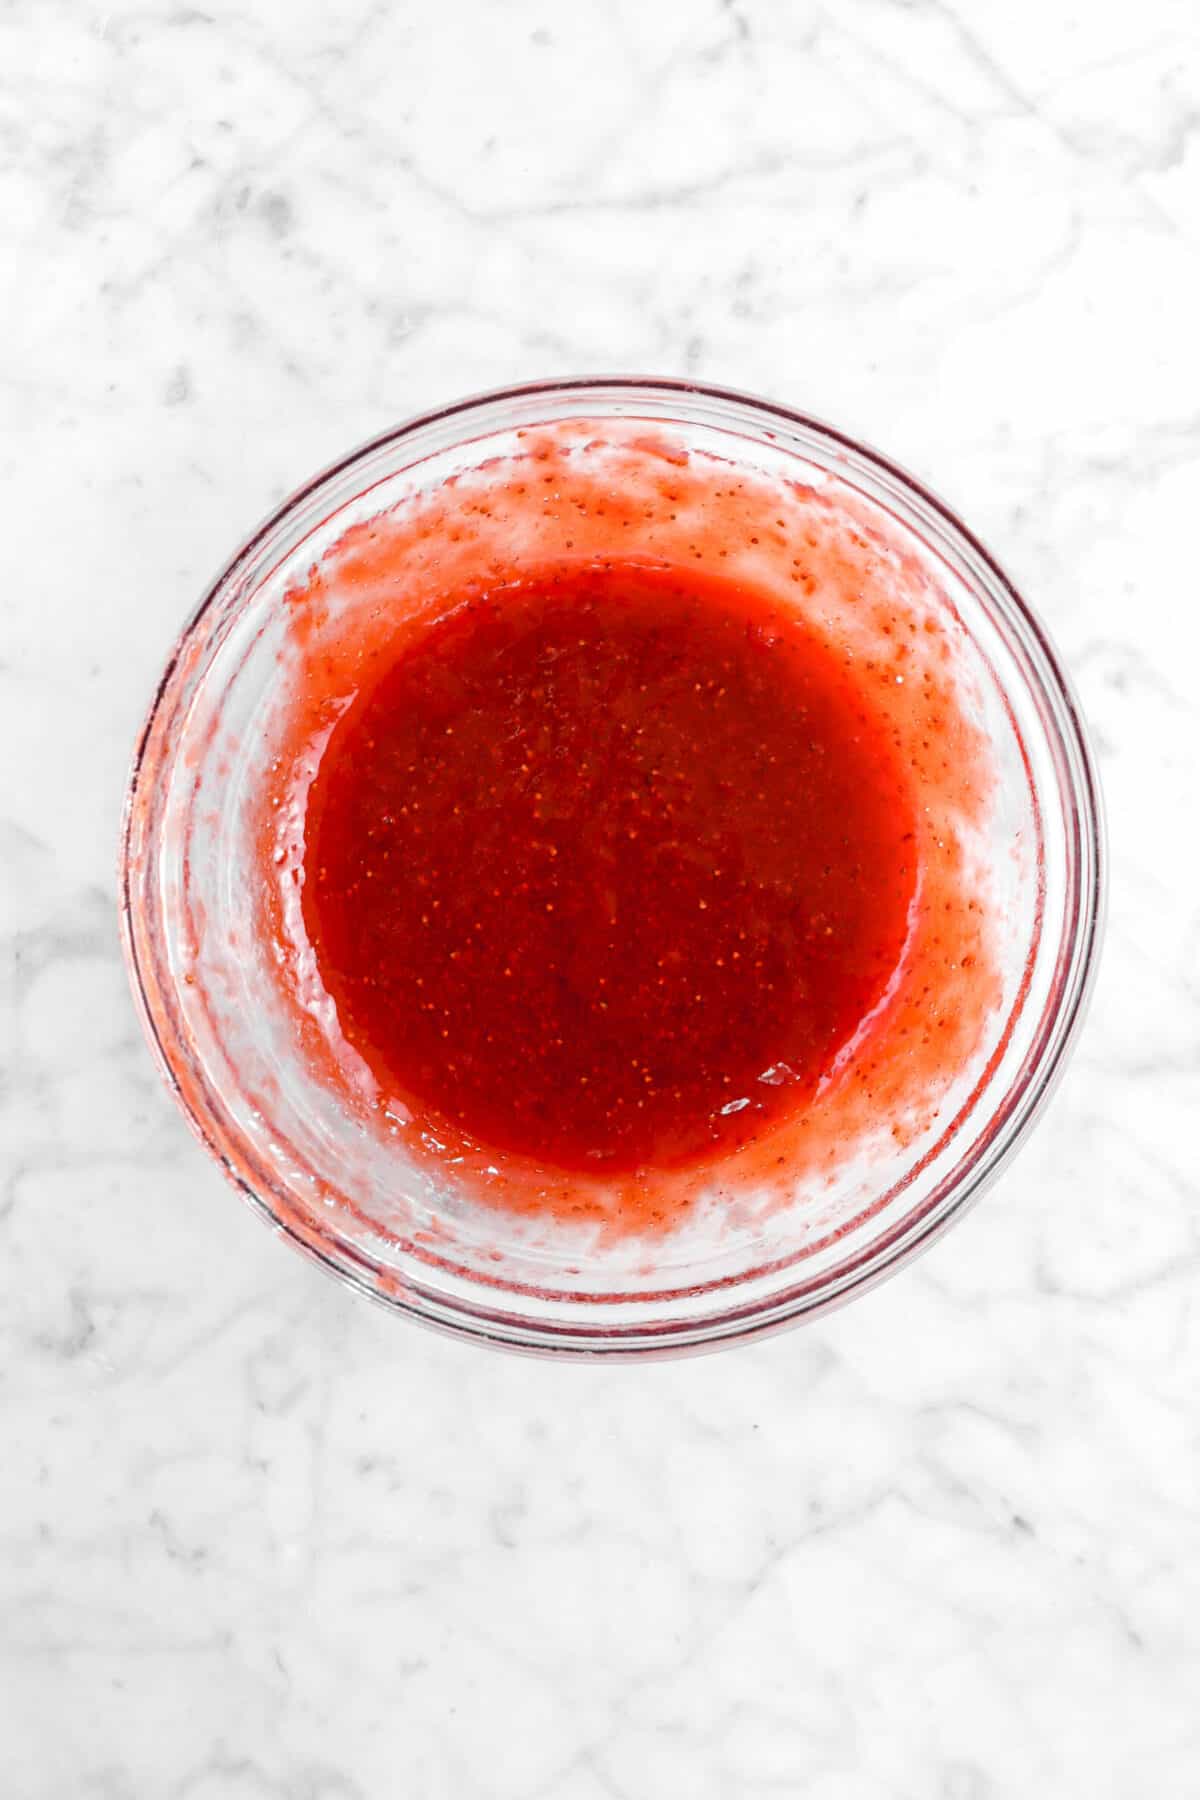 strawberry jam in glass bowl